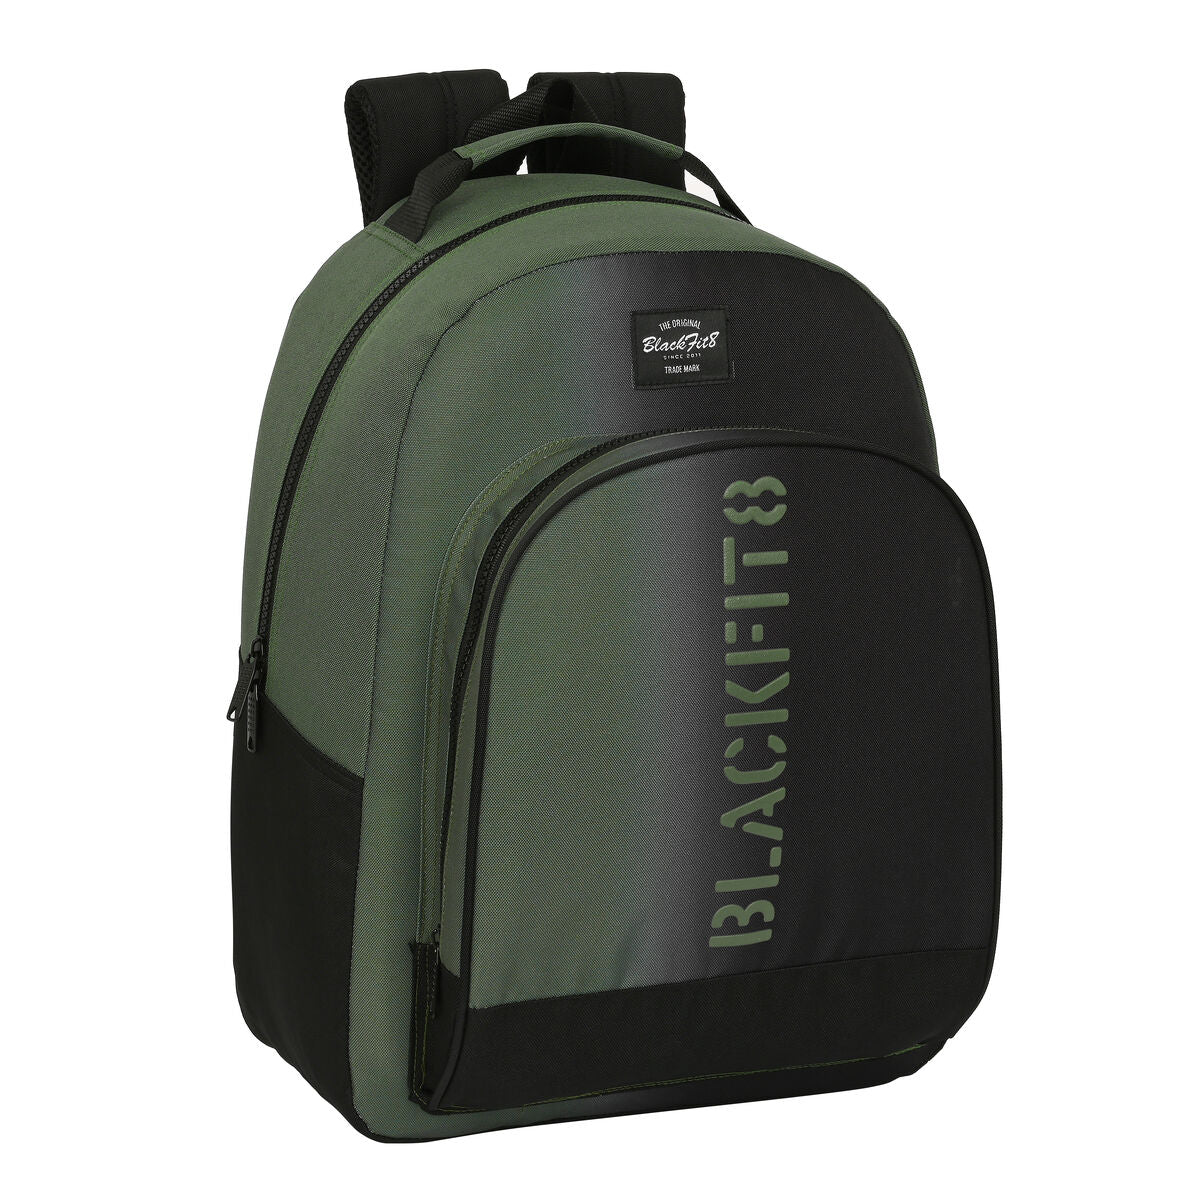 Skolebag BlackFit8 Gradient Svart Militærgrønn (32 x 42 x 15 cm)